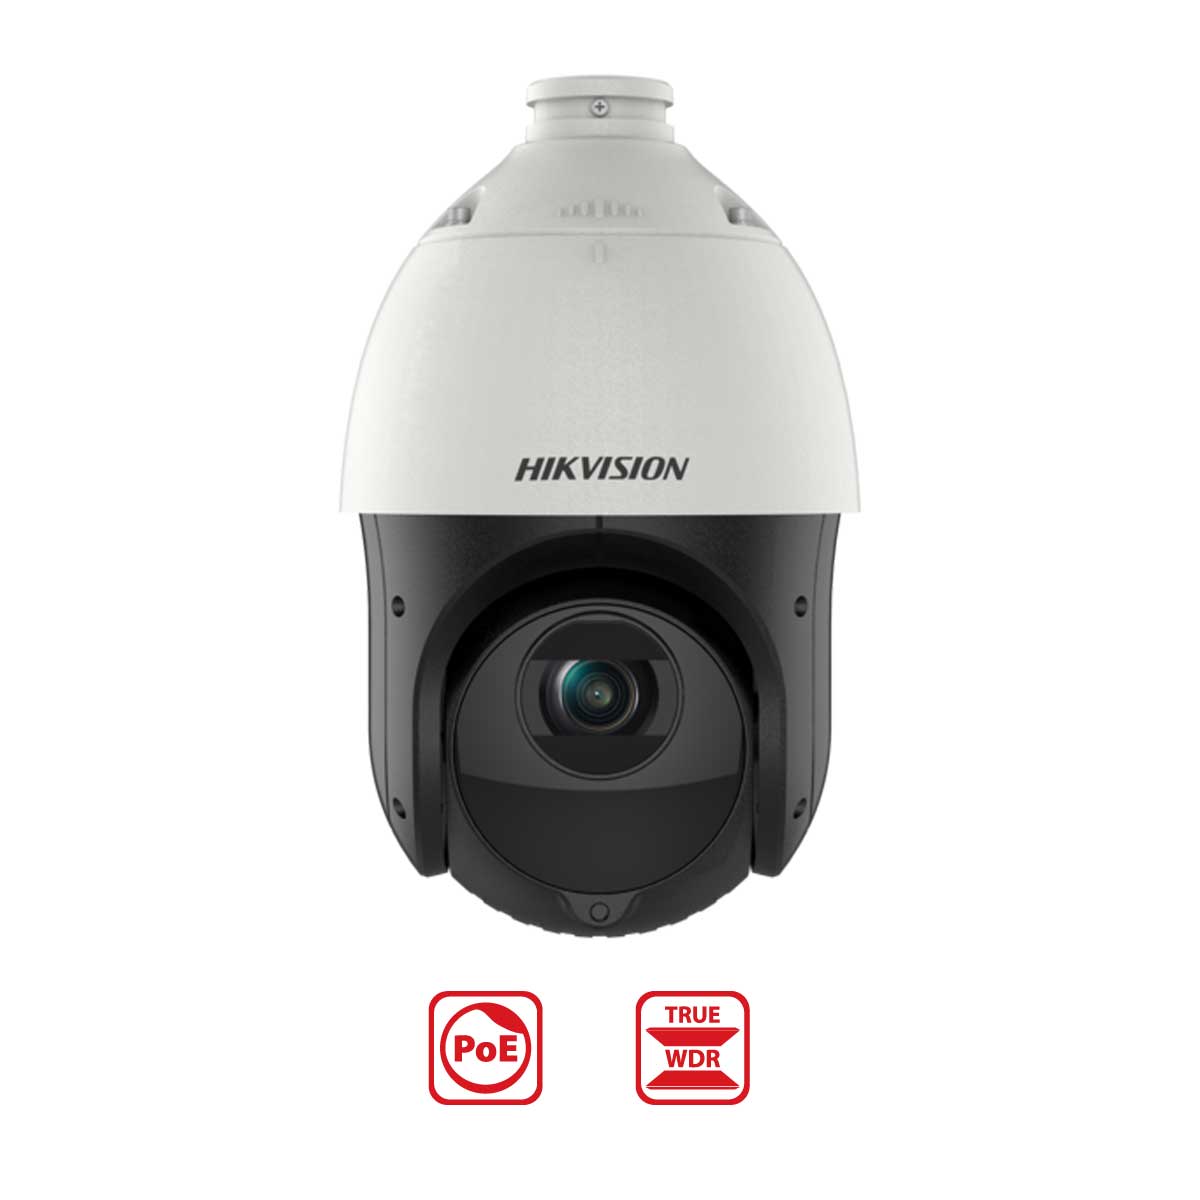 Camera IP Speed dome hồng ngoại Hikvision DS-2DE4415IW-DE (T5) 4MP, hồng ngoại đến 100m, Zoom quang 15X